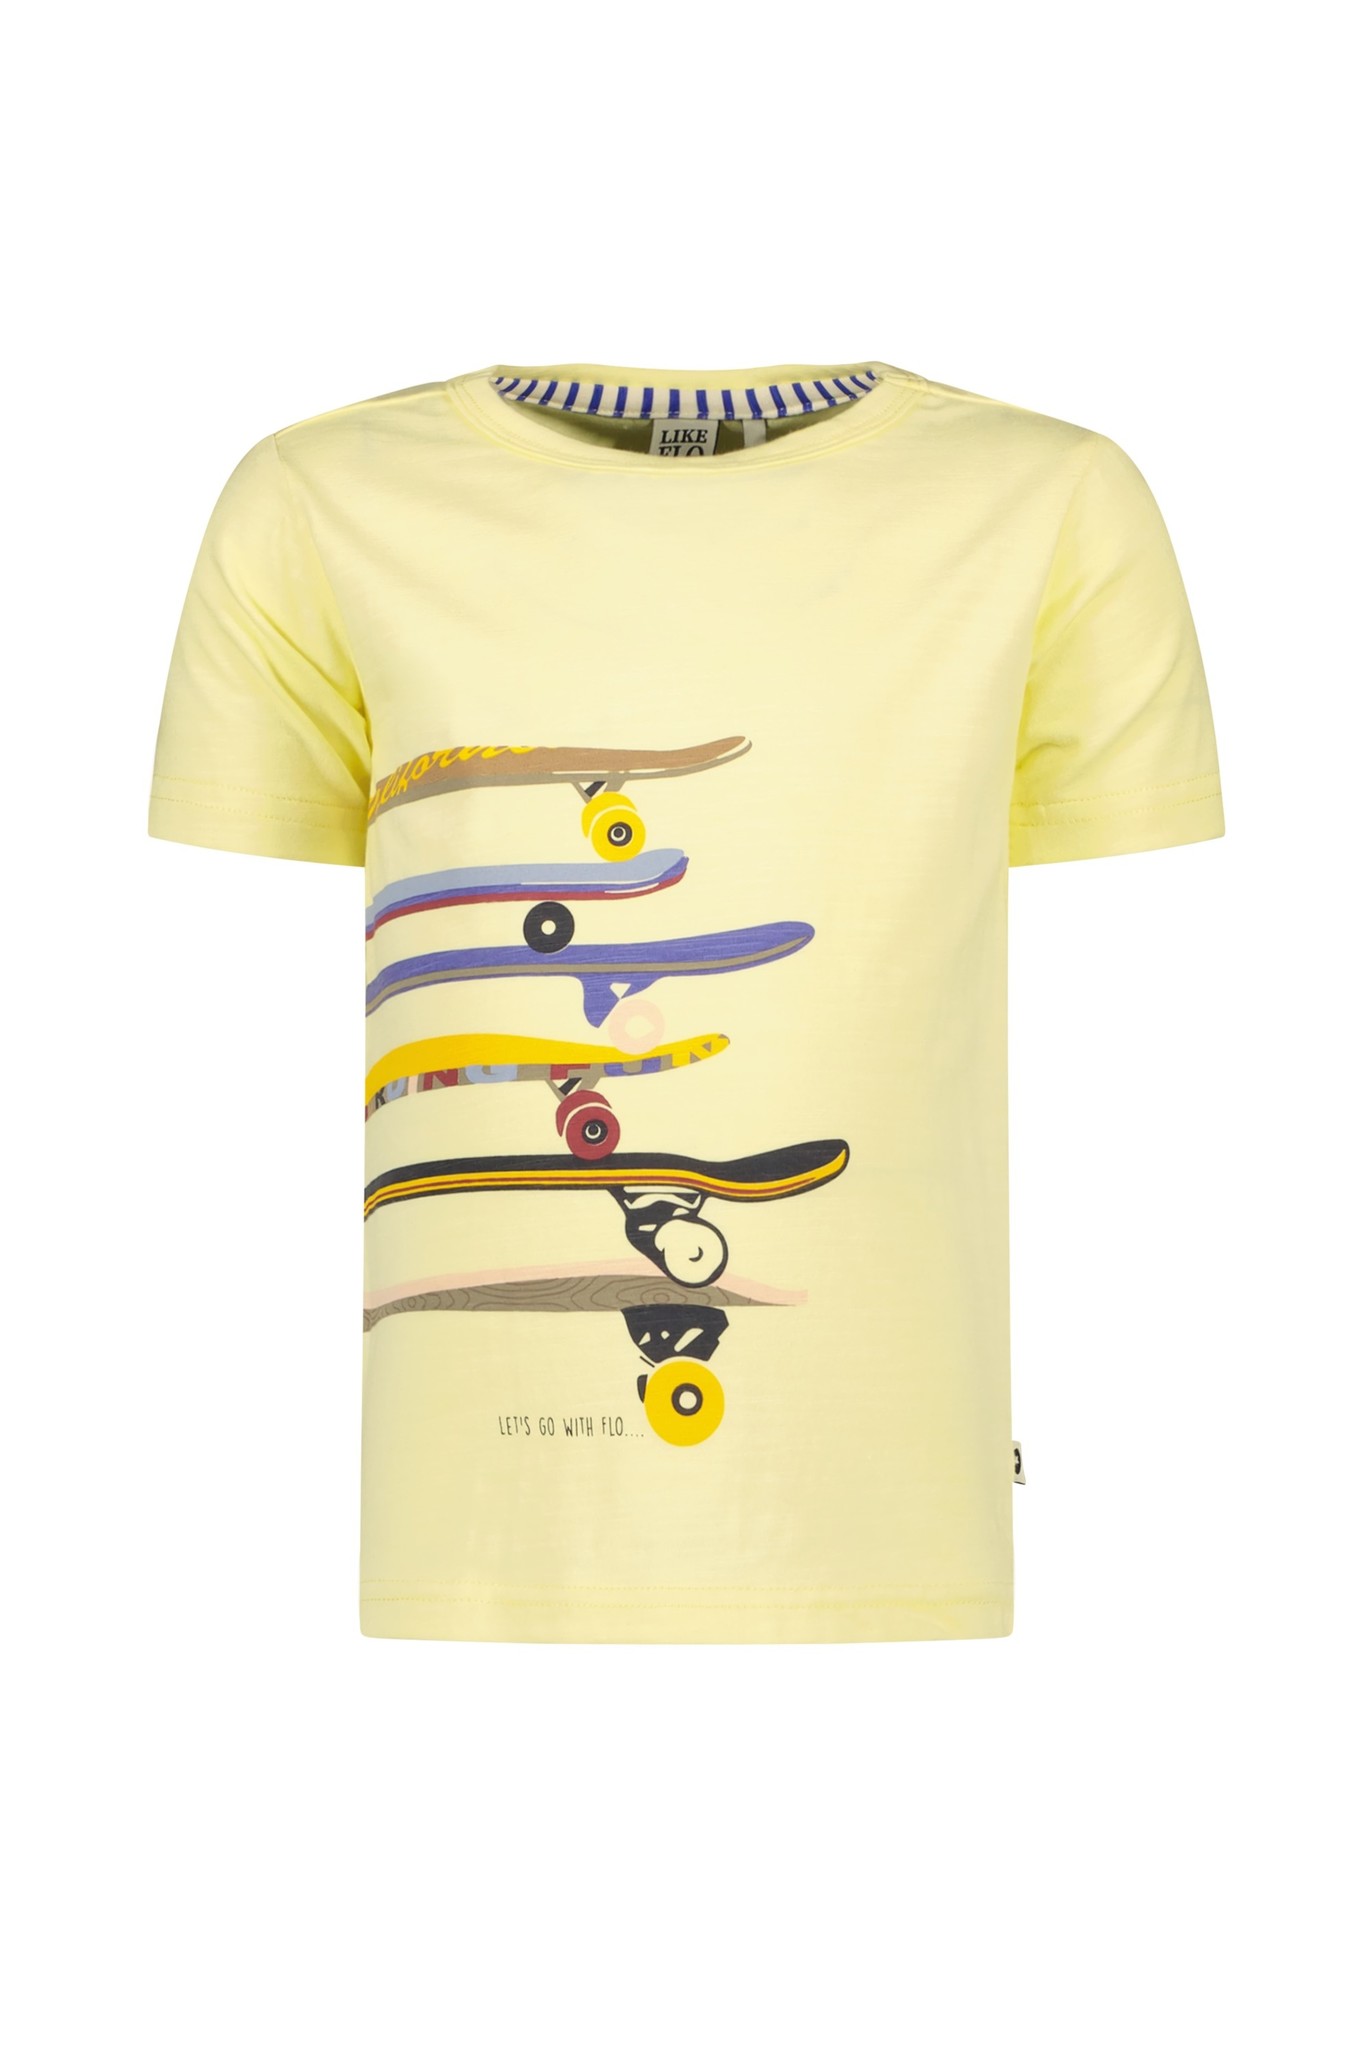 Like Flo - T-Shirt - Soft yellow - Maat 134